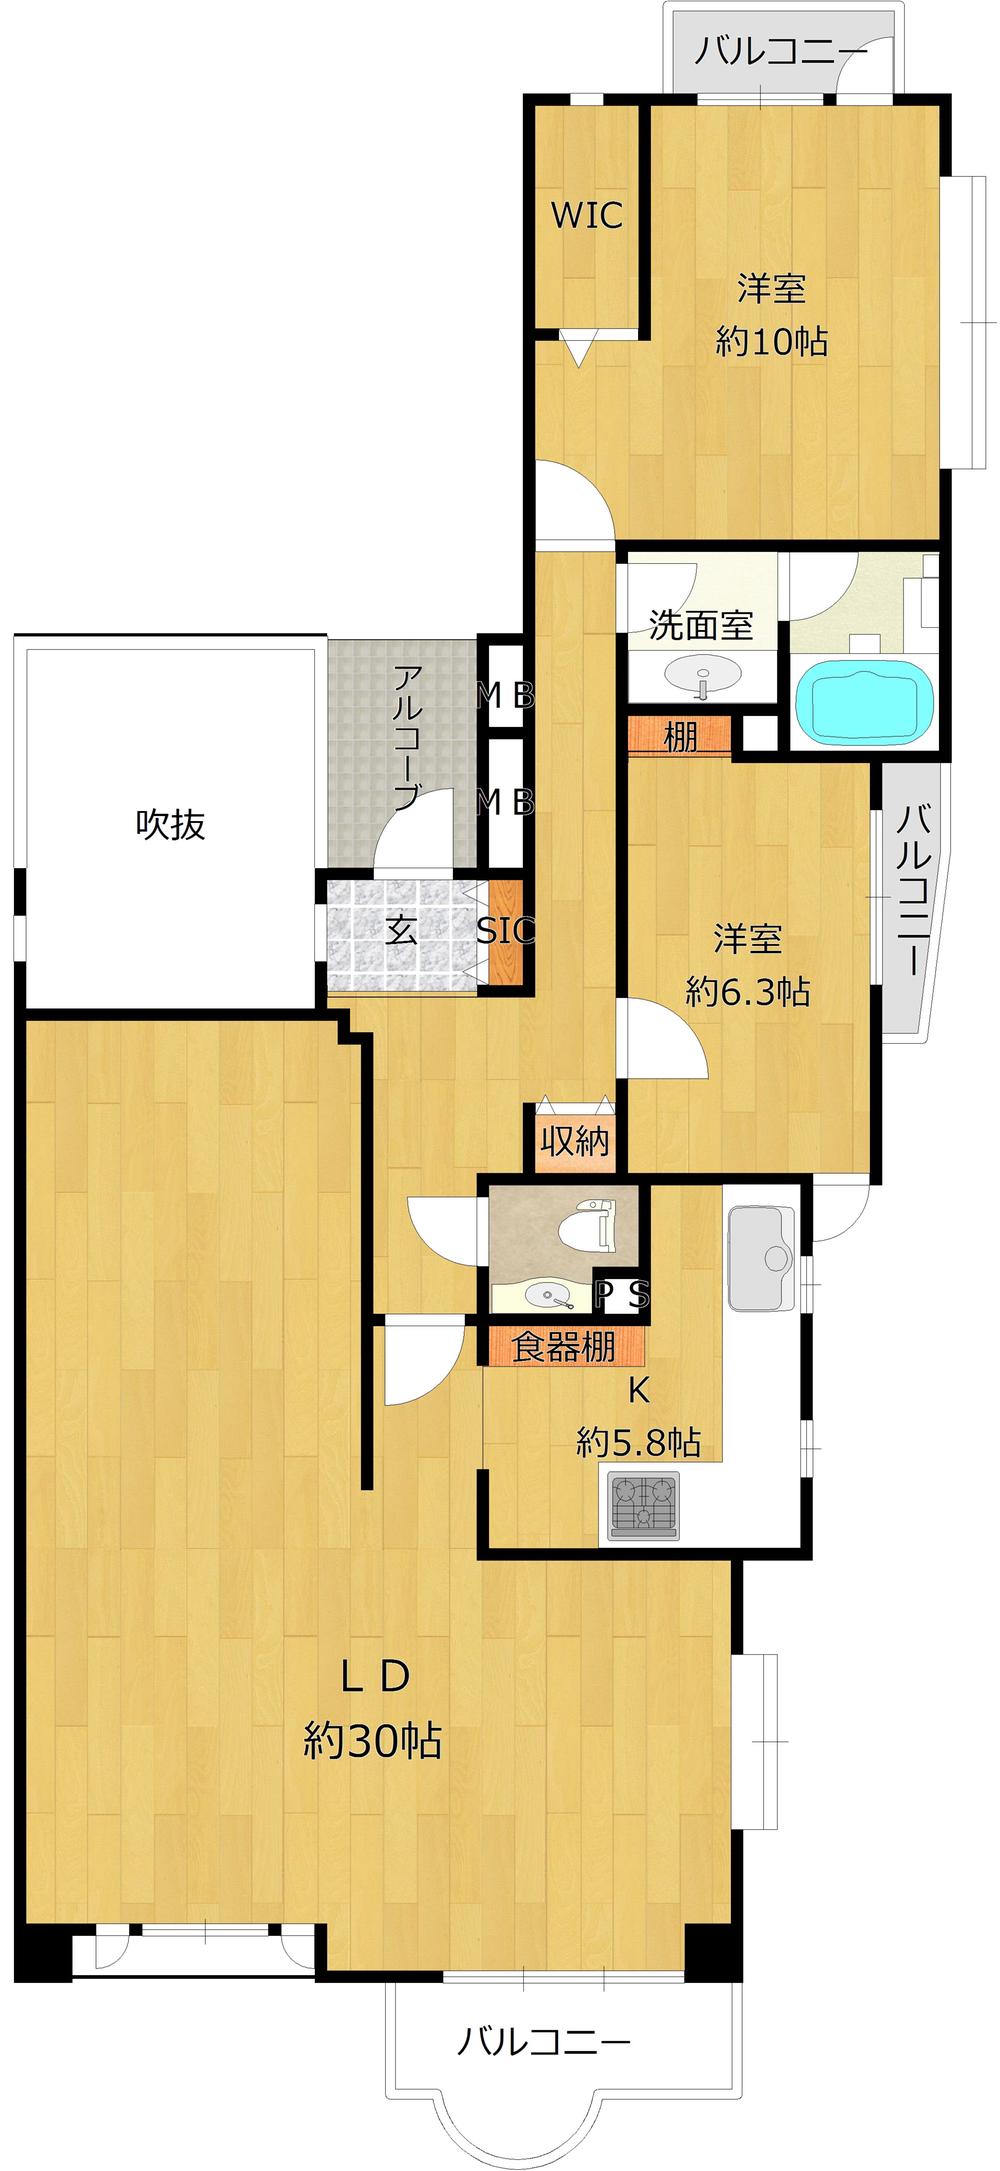 Floor plan. 2LDK, Price 24,800,000 yen, Footprint 116.07 sq m , Balcony area 10.25 sq m